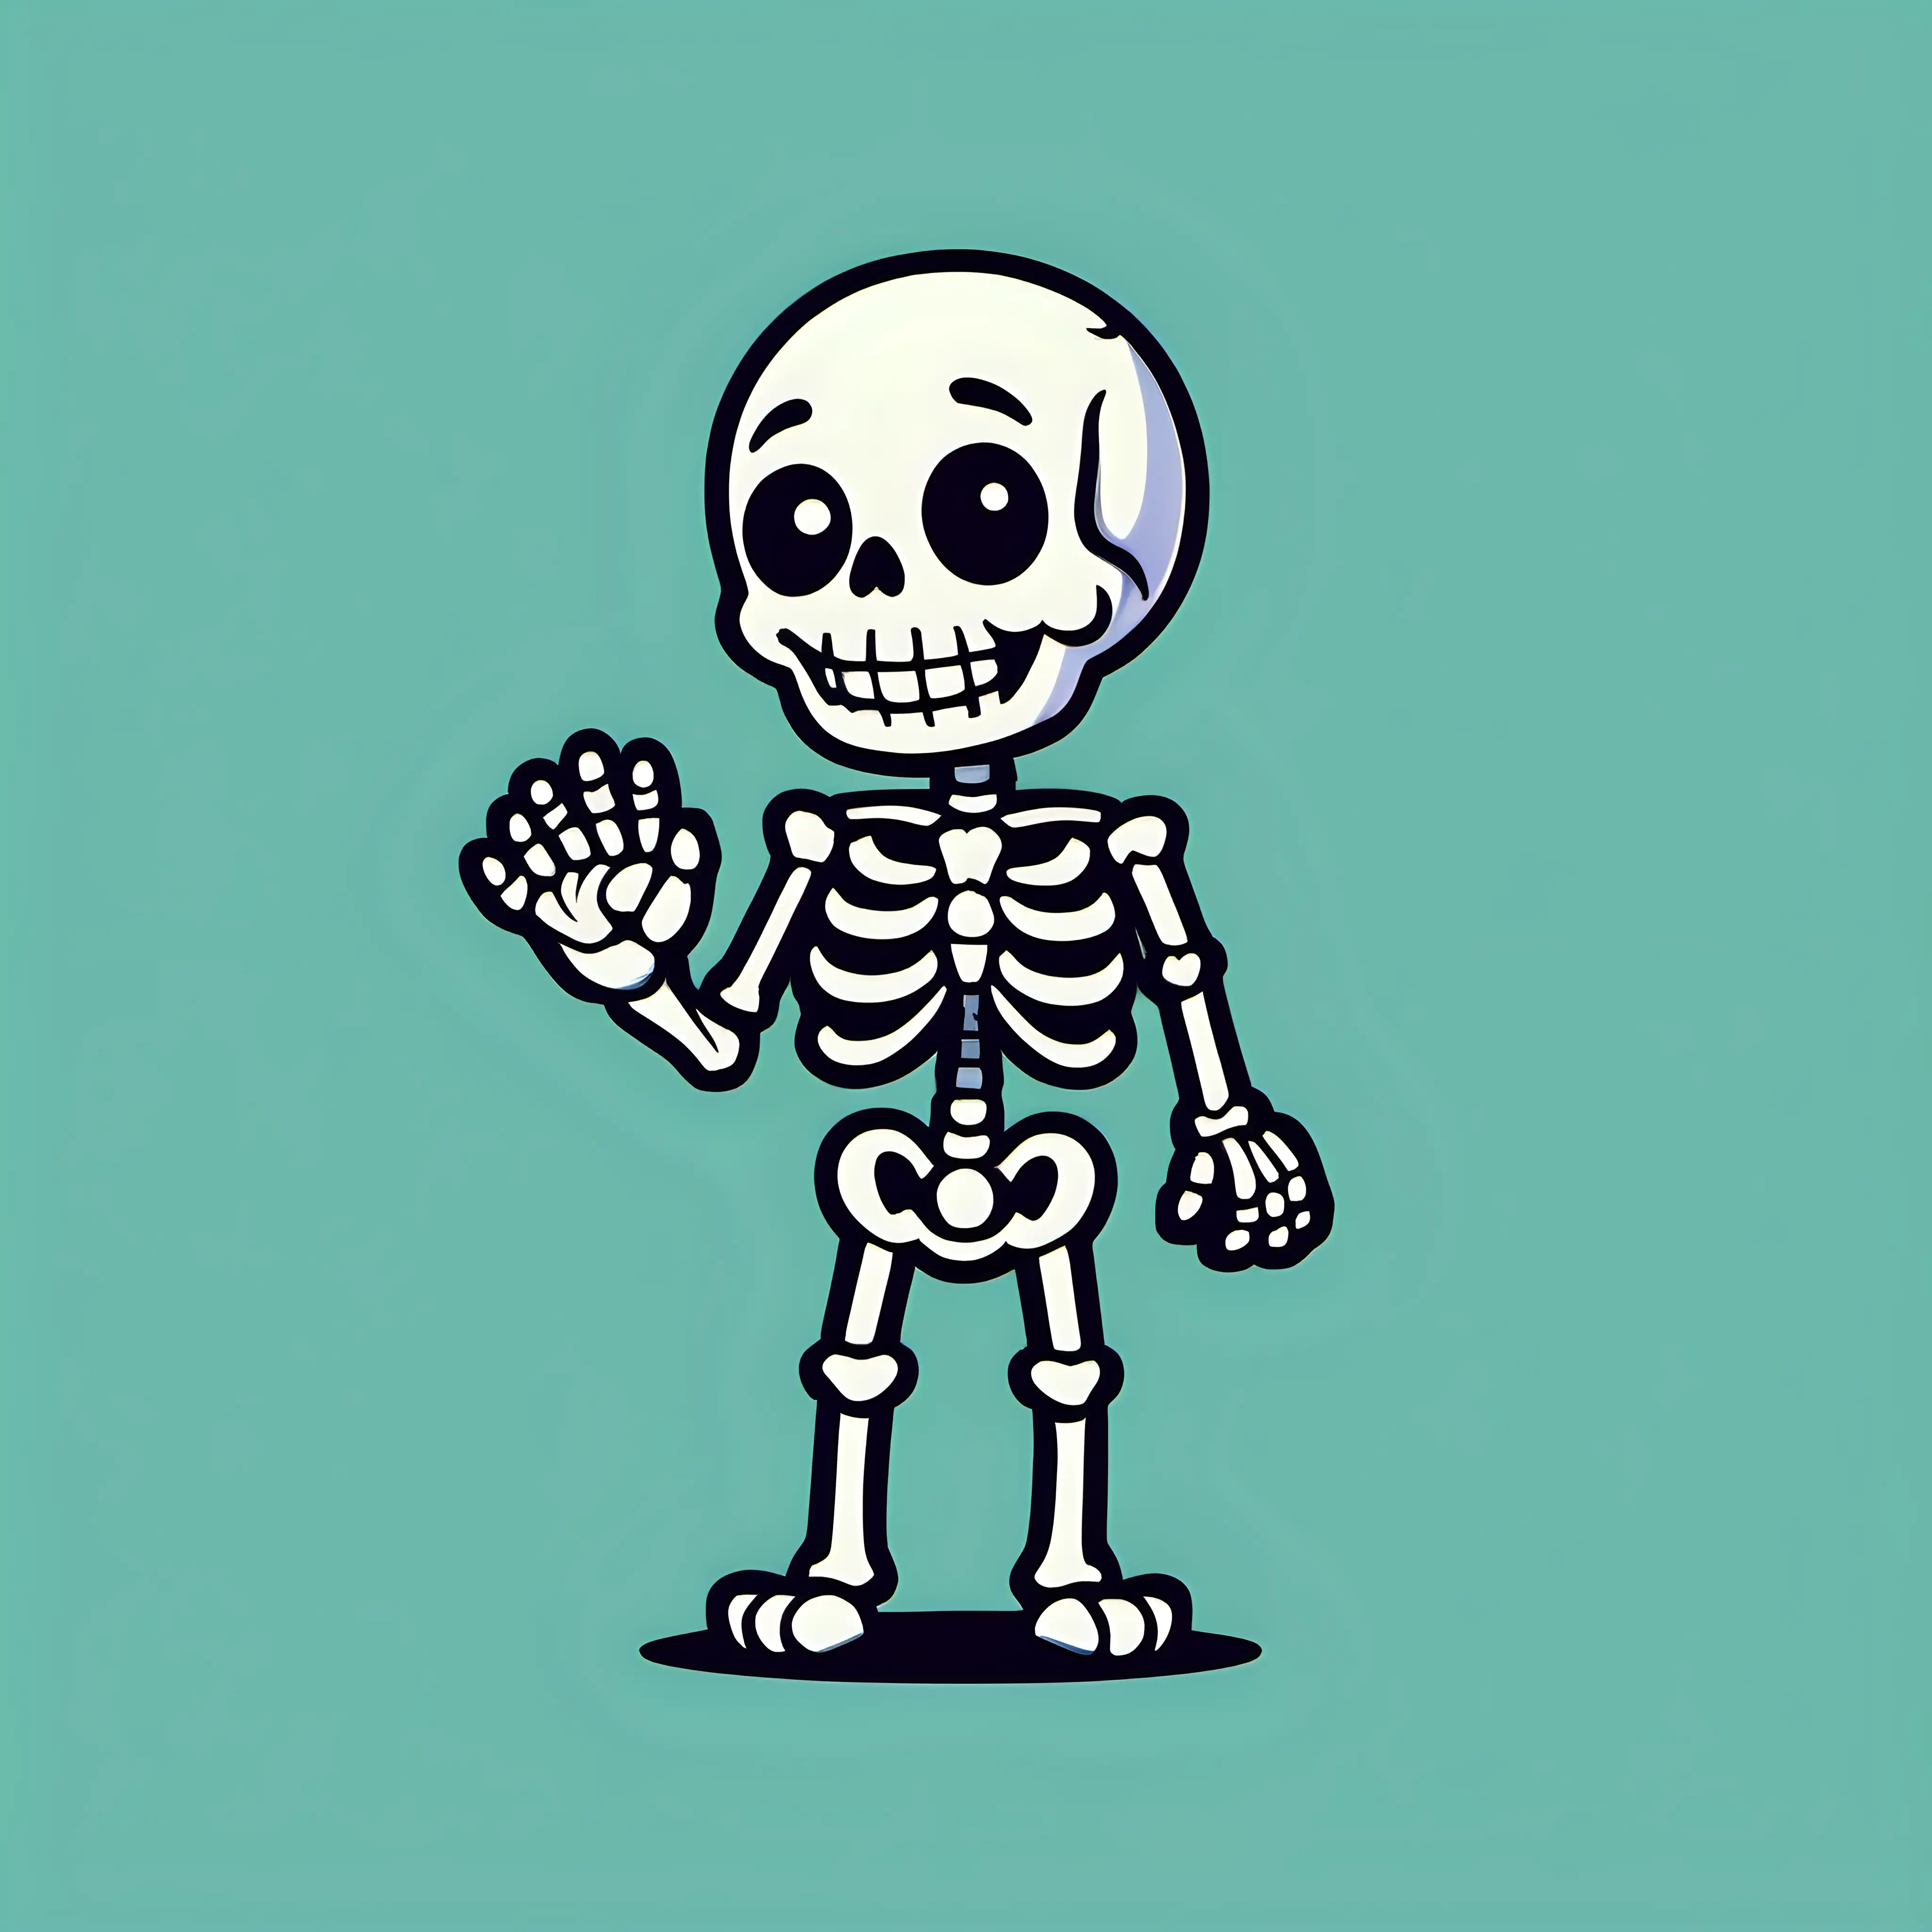 Friendly Skeleton Waving Hello in Charming Emote Style